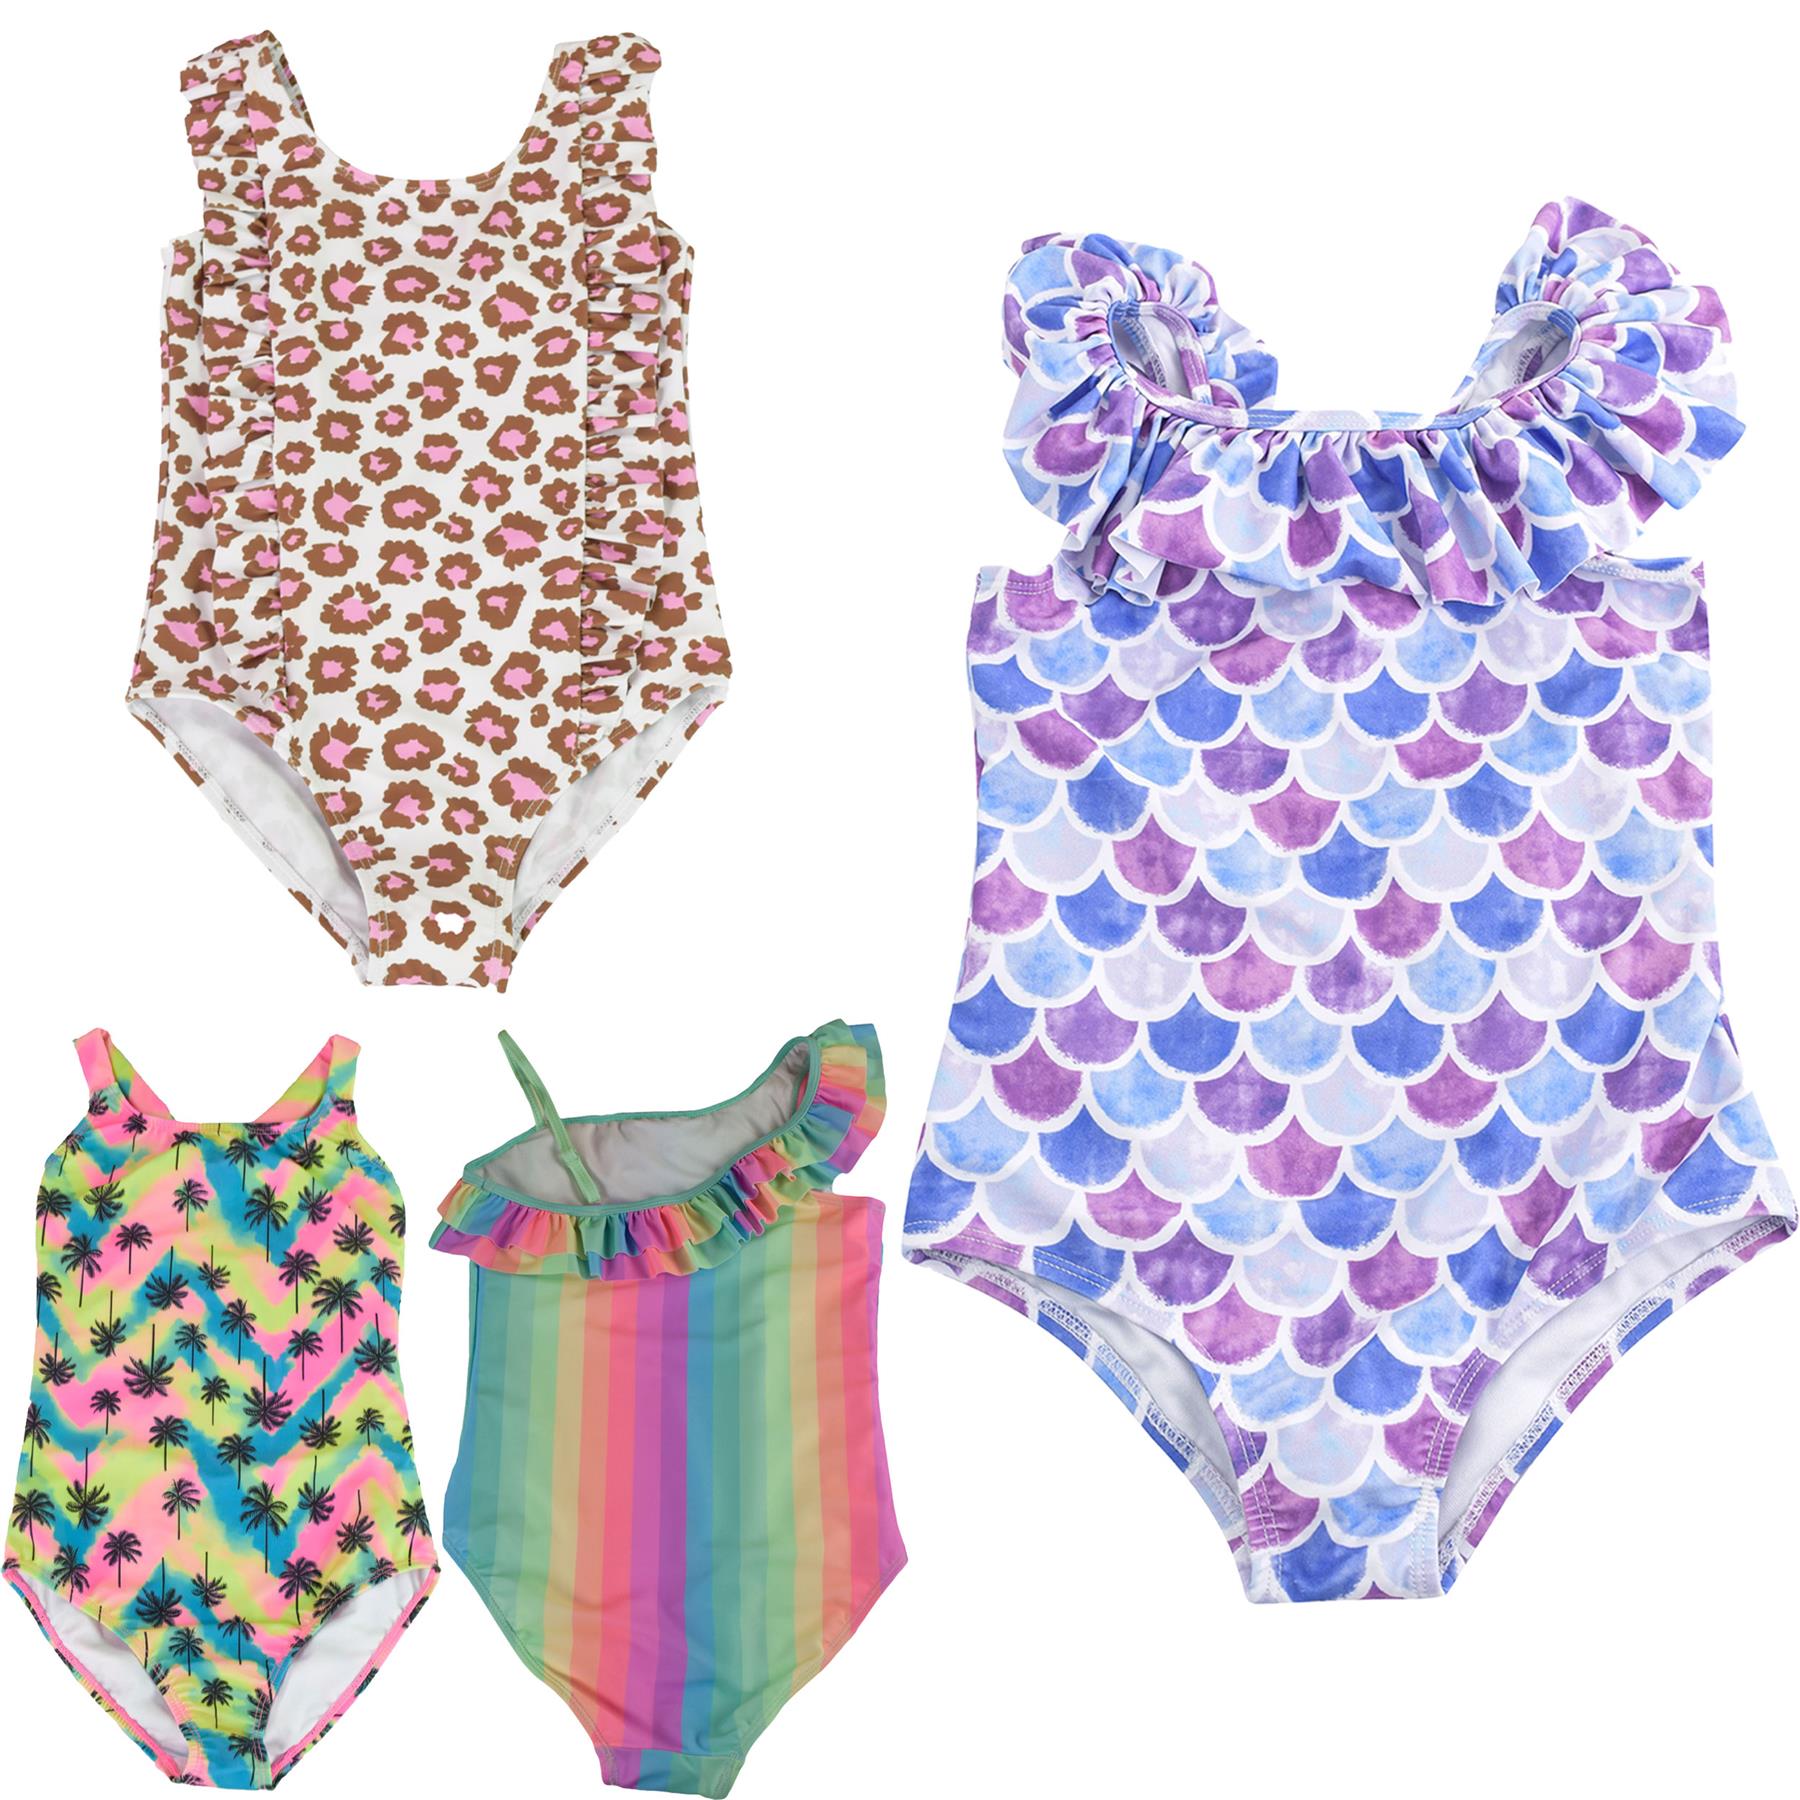 A2Z 4 Kids Girls All in One Swimming Costume Kids Swimsuit Beach Bath Swimwear